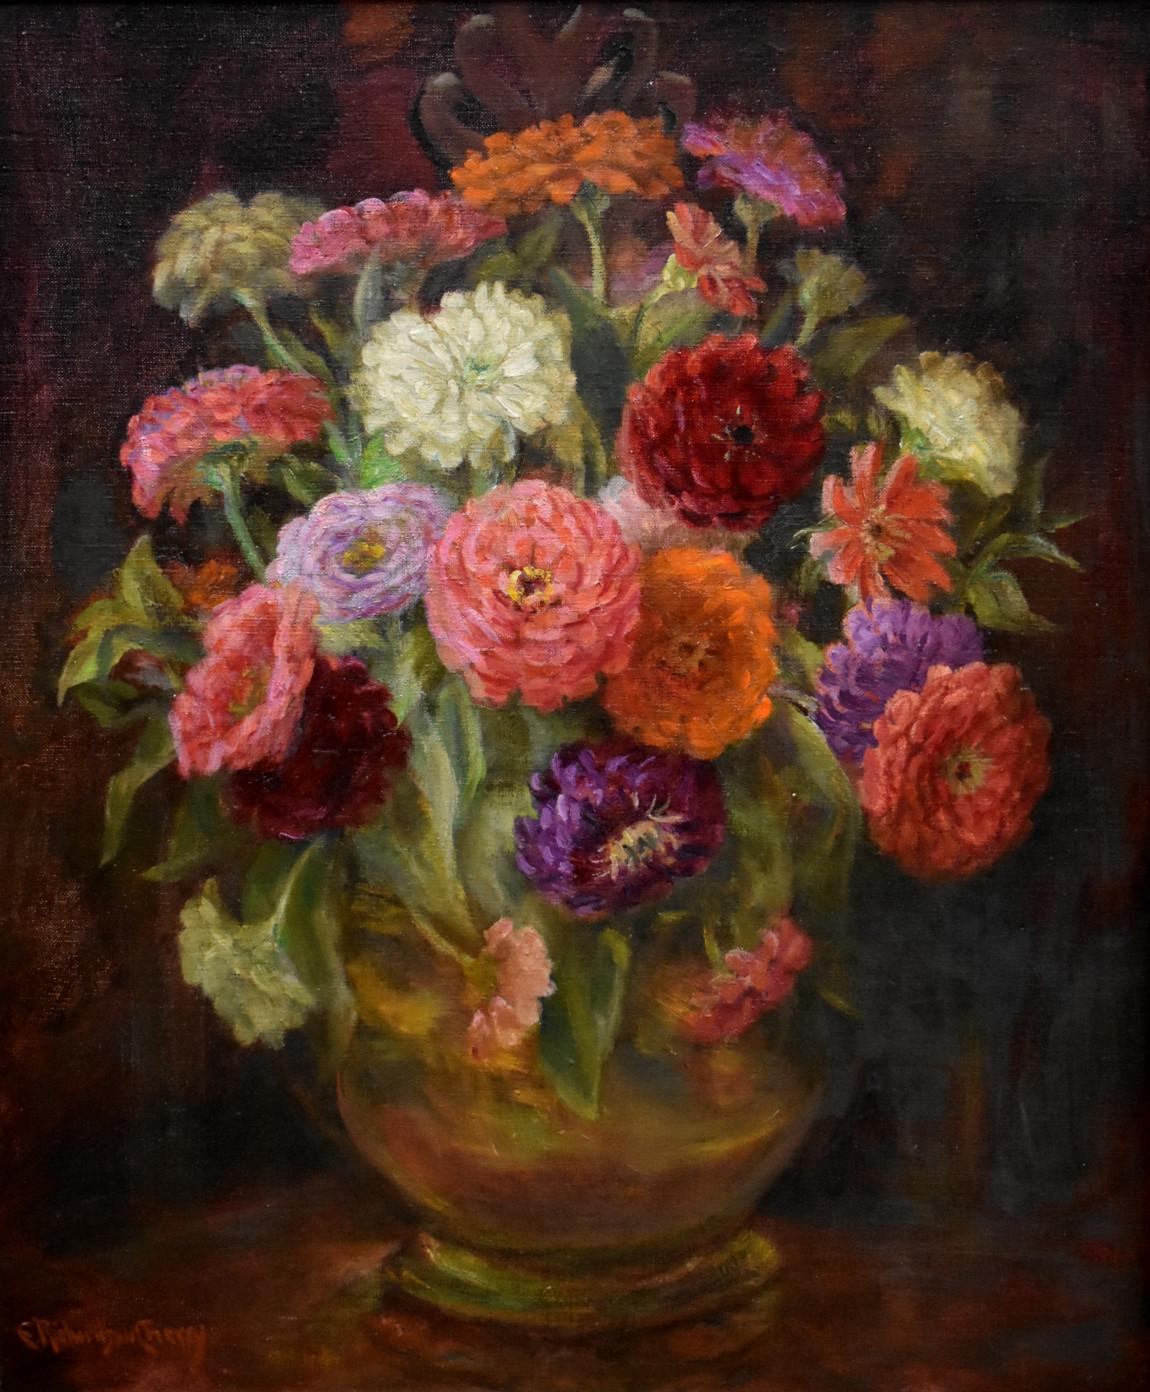 Emma Richardson Cherry Still-Life Painting - "ZINNIAS" FLOWER BOUQUET STILL LIFE HOUSTON ARTIST 1930s